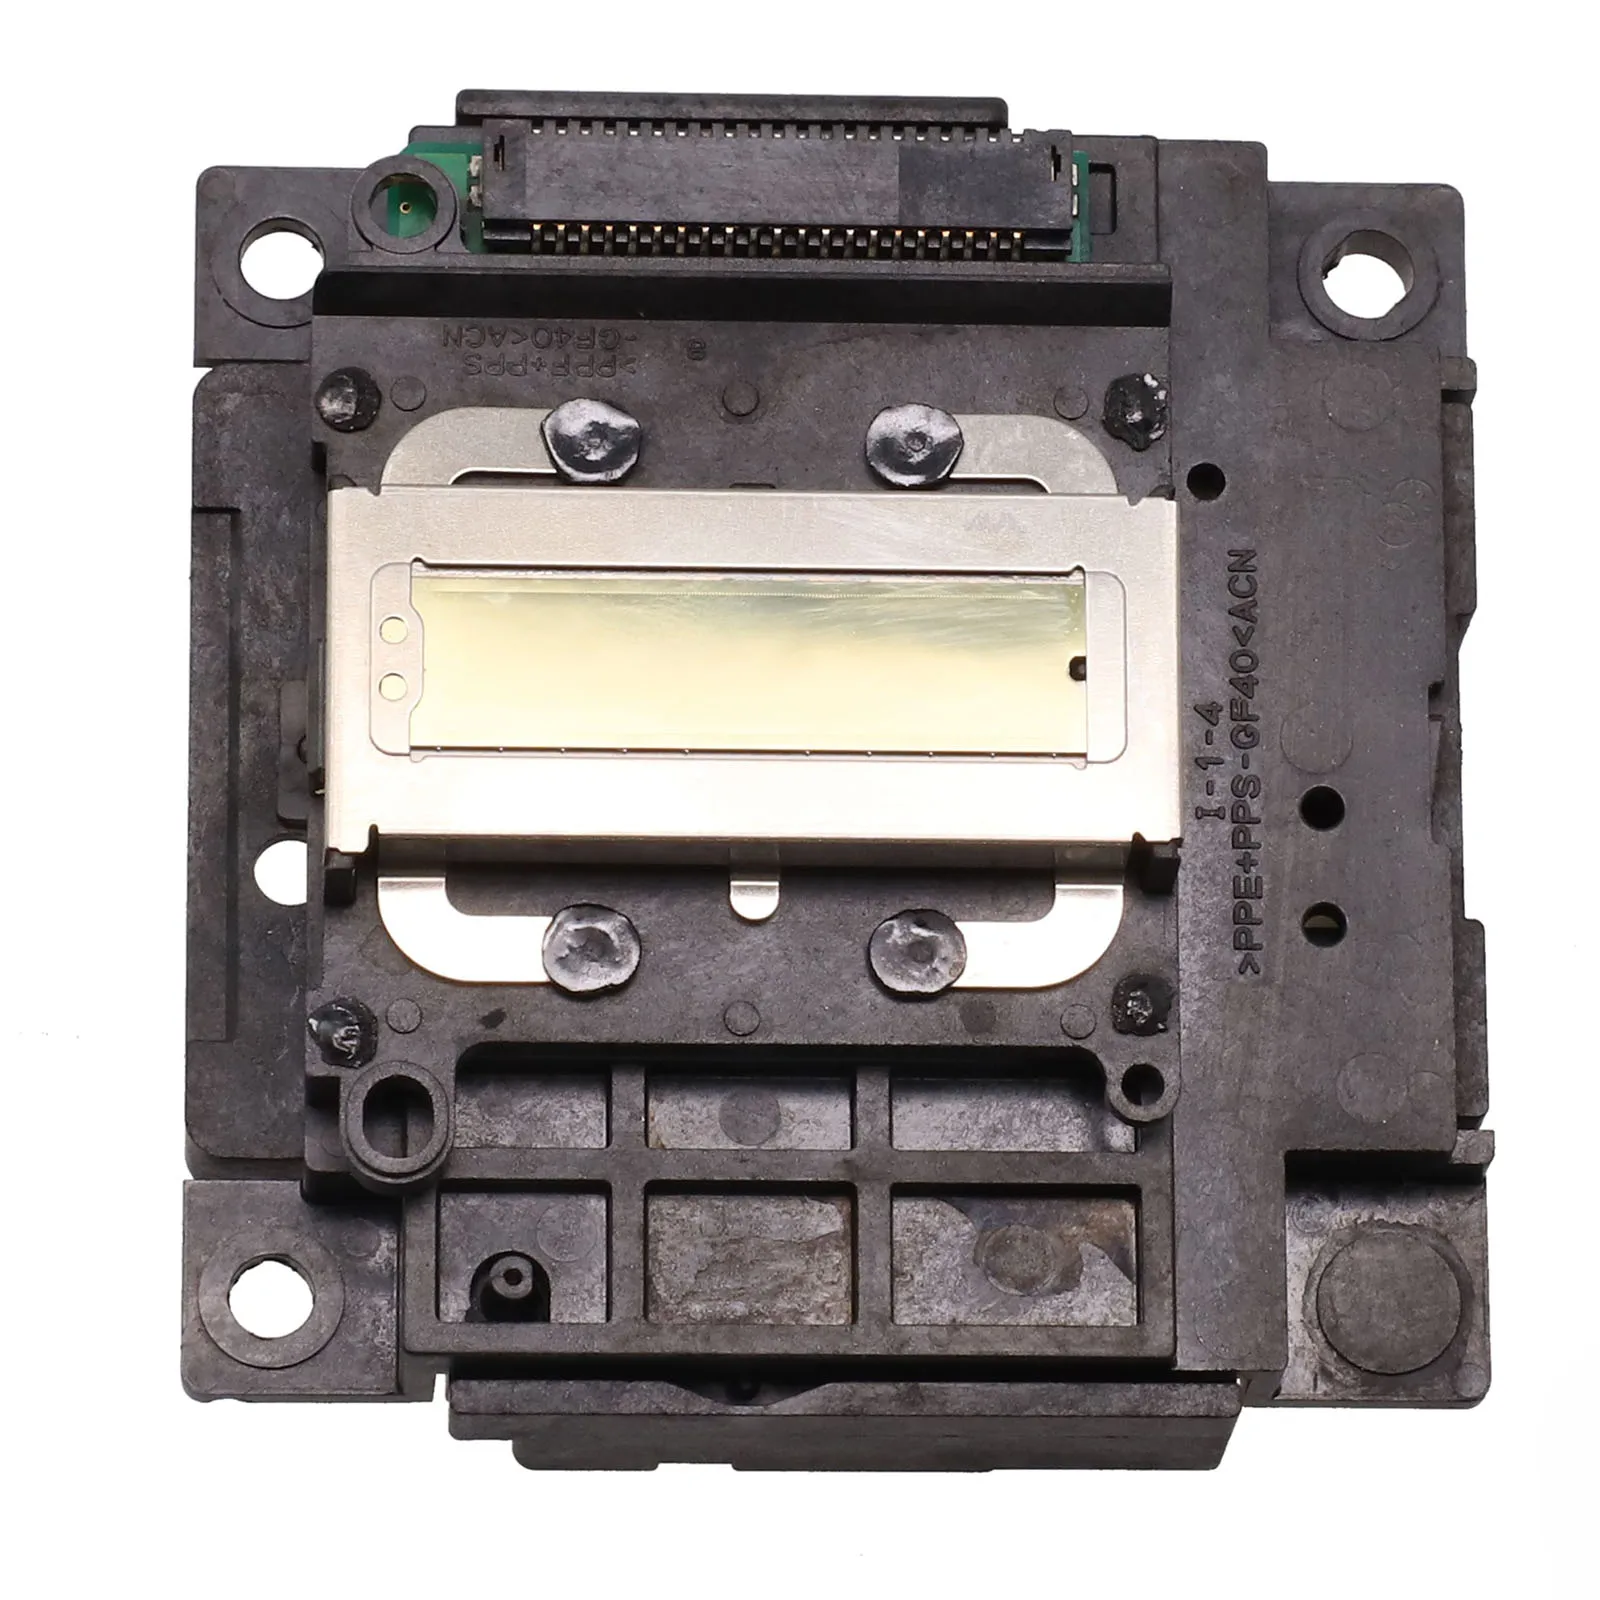 

Сменная печатающая головка 1 шт., детали для принтера L301, L300, L303, L351, L355, L358, L111, L120, L210, L211, ME401, ME303